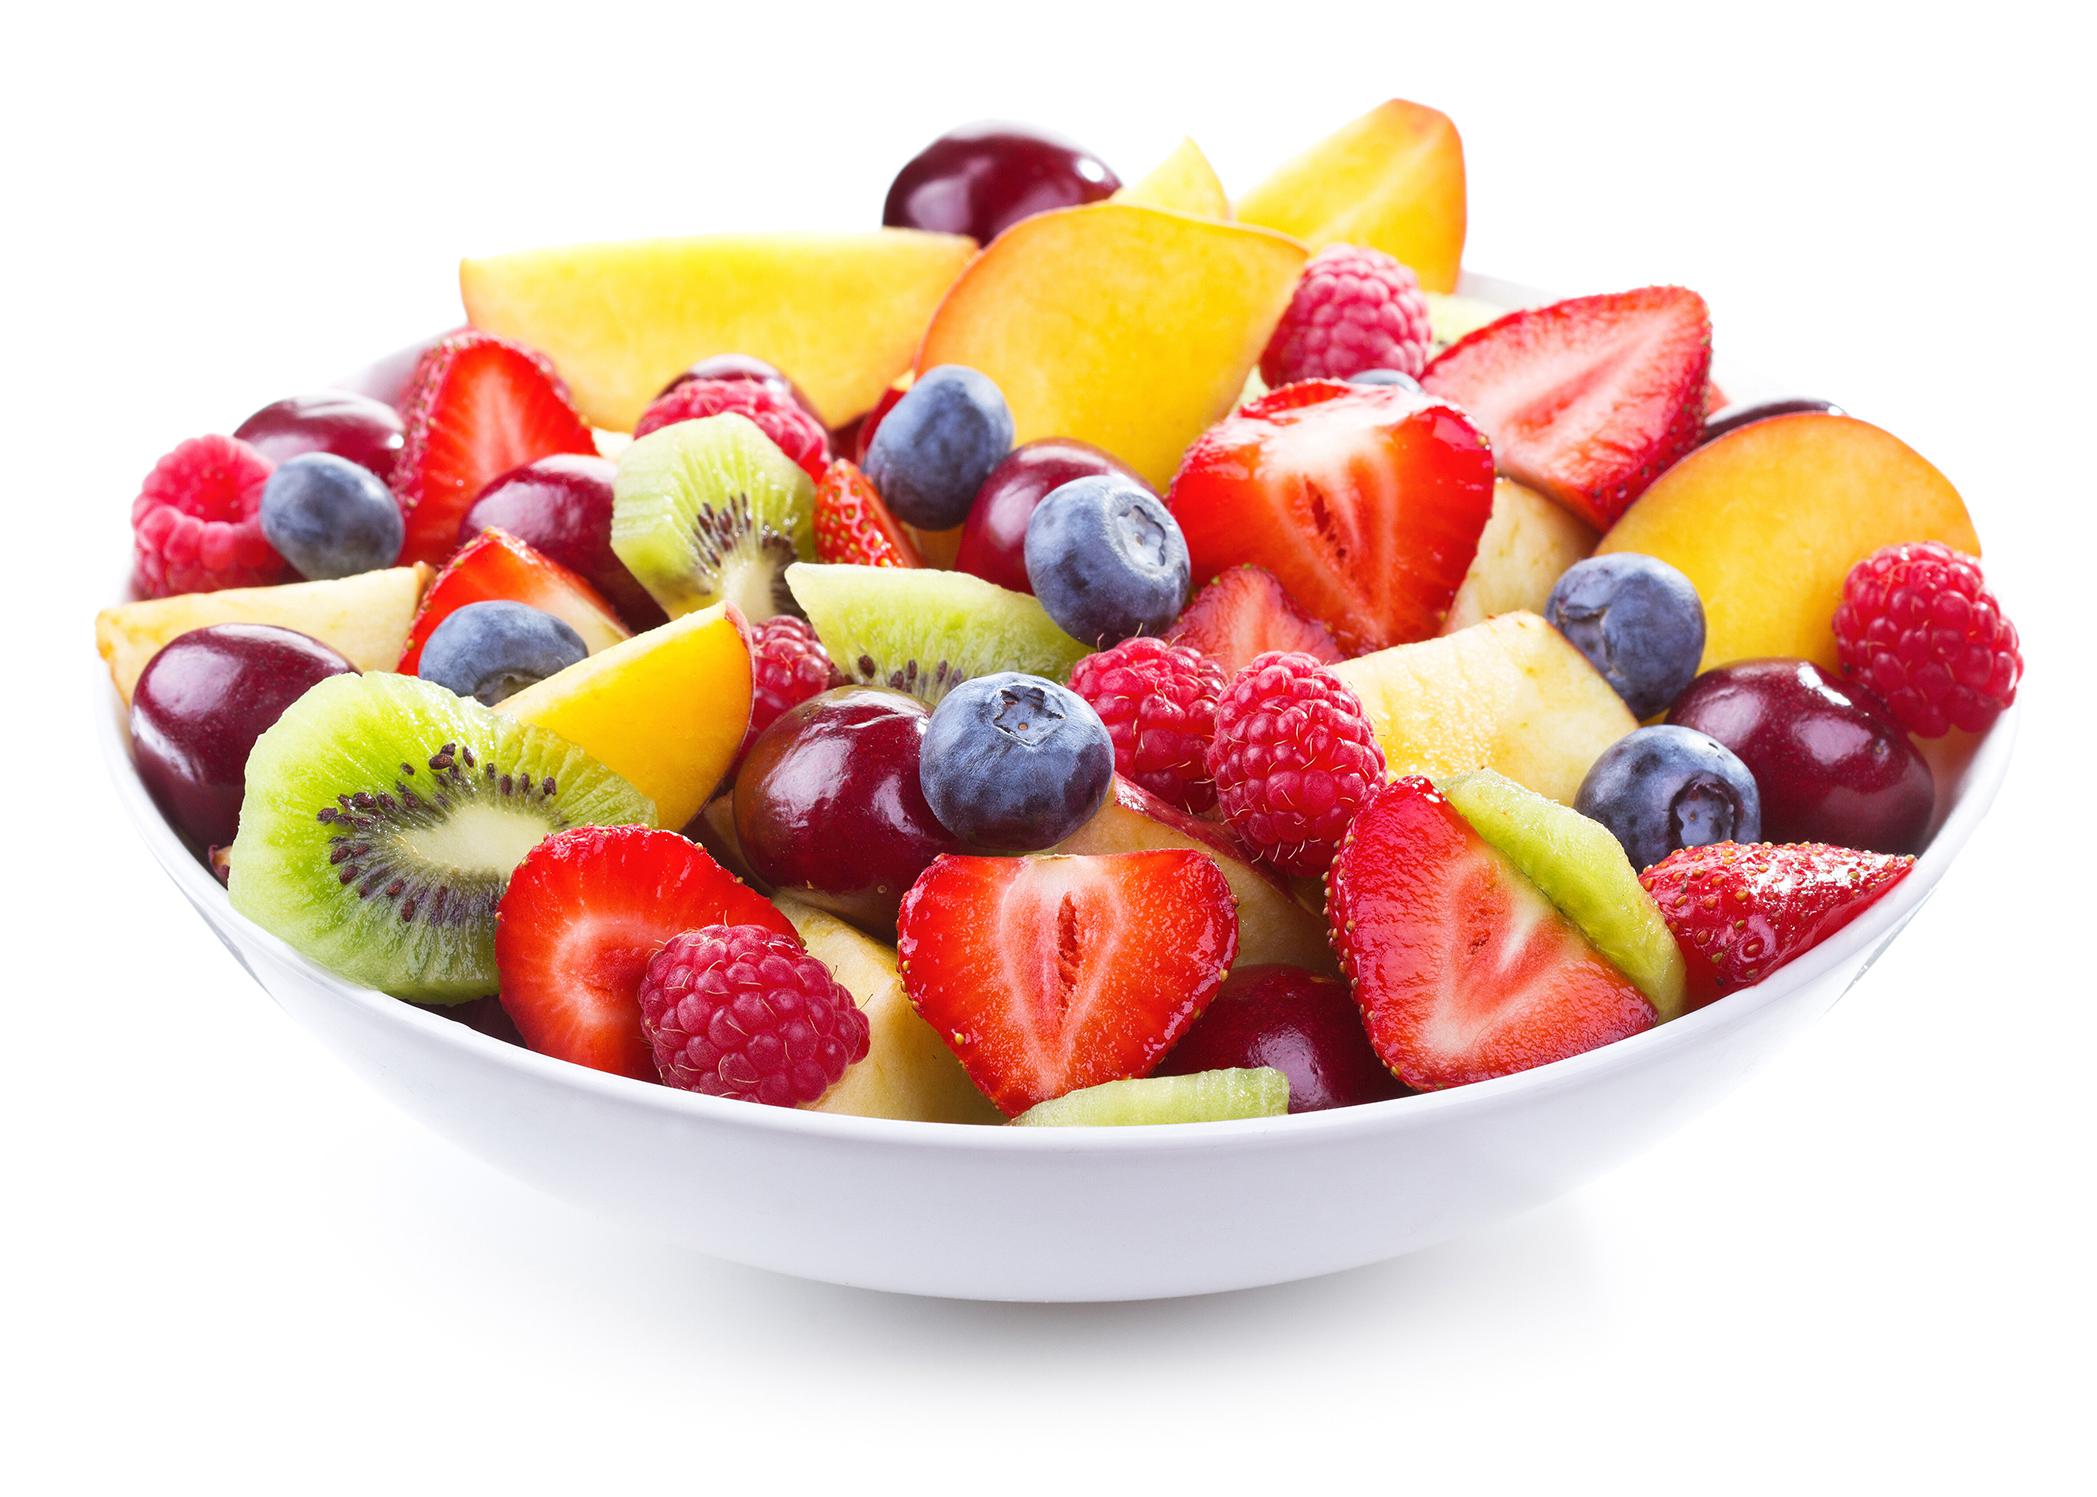 A bowl of various fruits